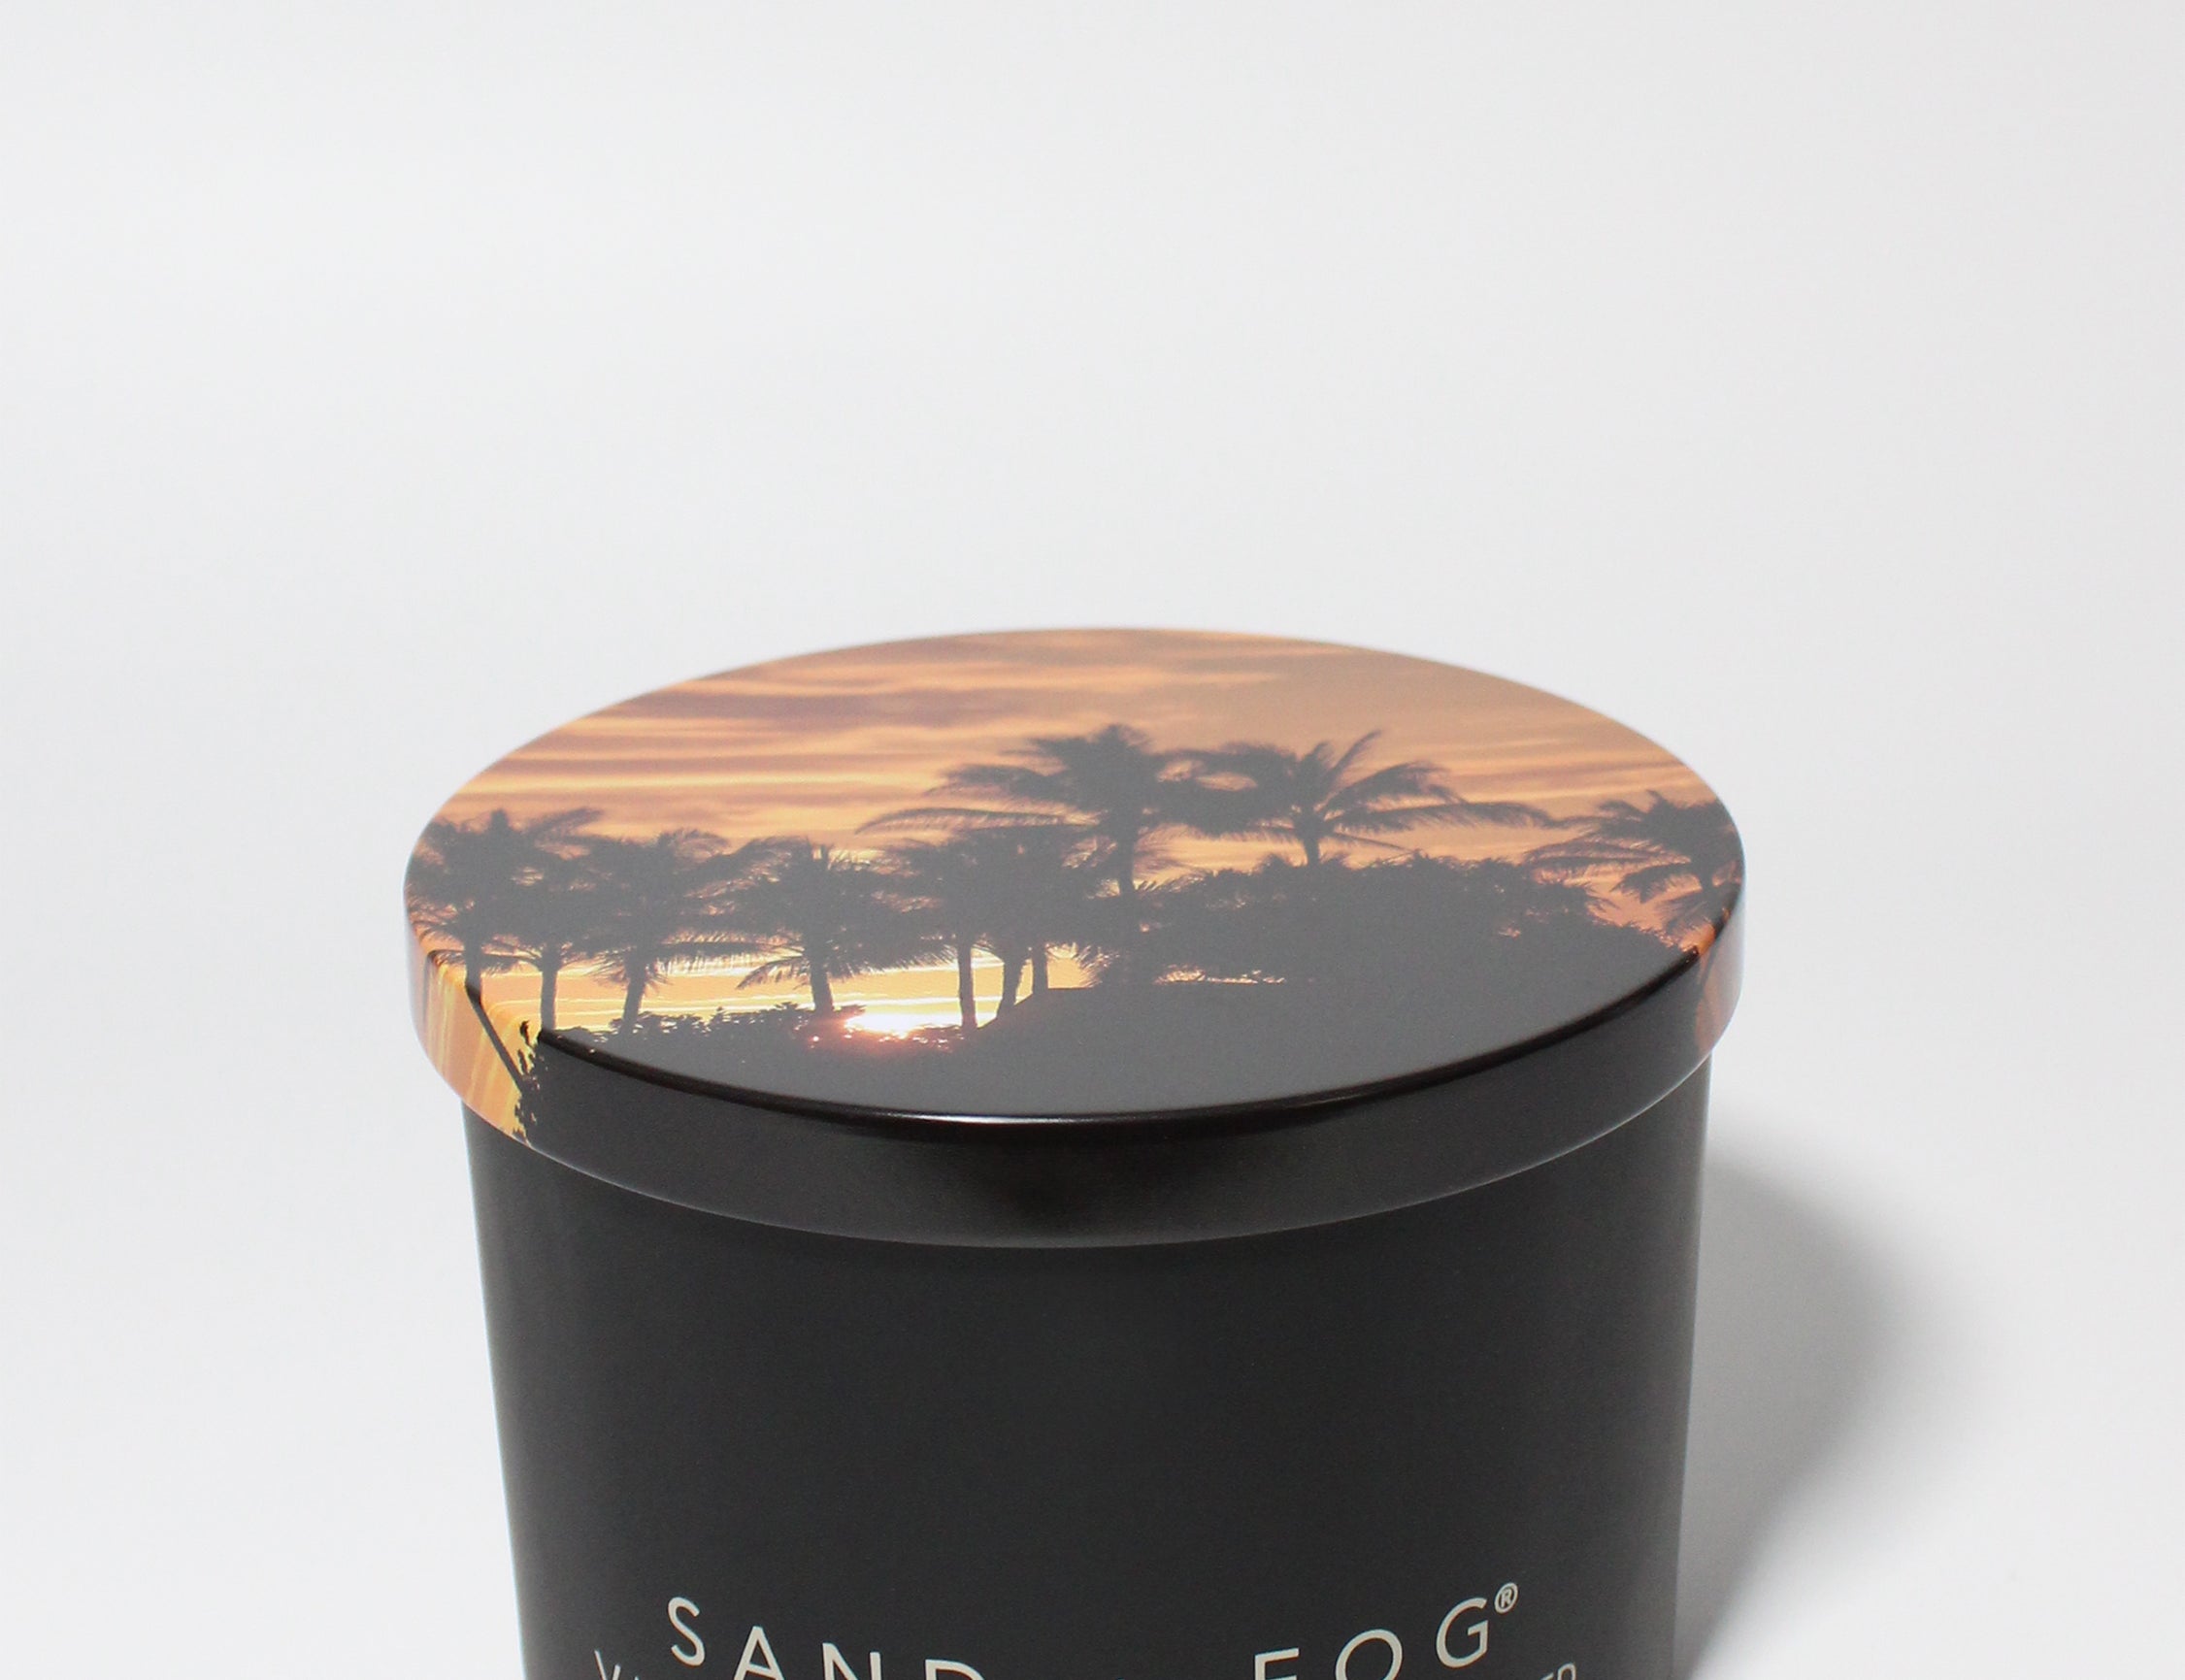 Vanilla Tobacco 12 oz scented candle Black vessel with Landscape Photo lid